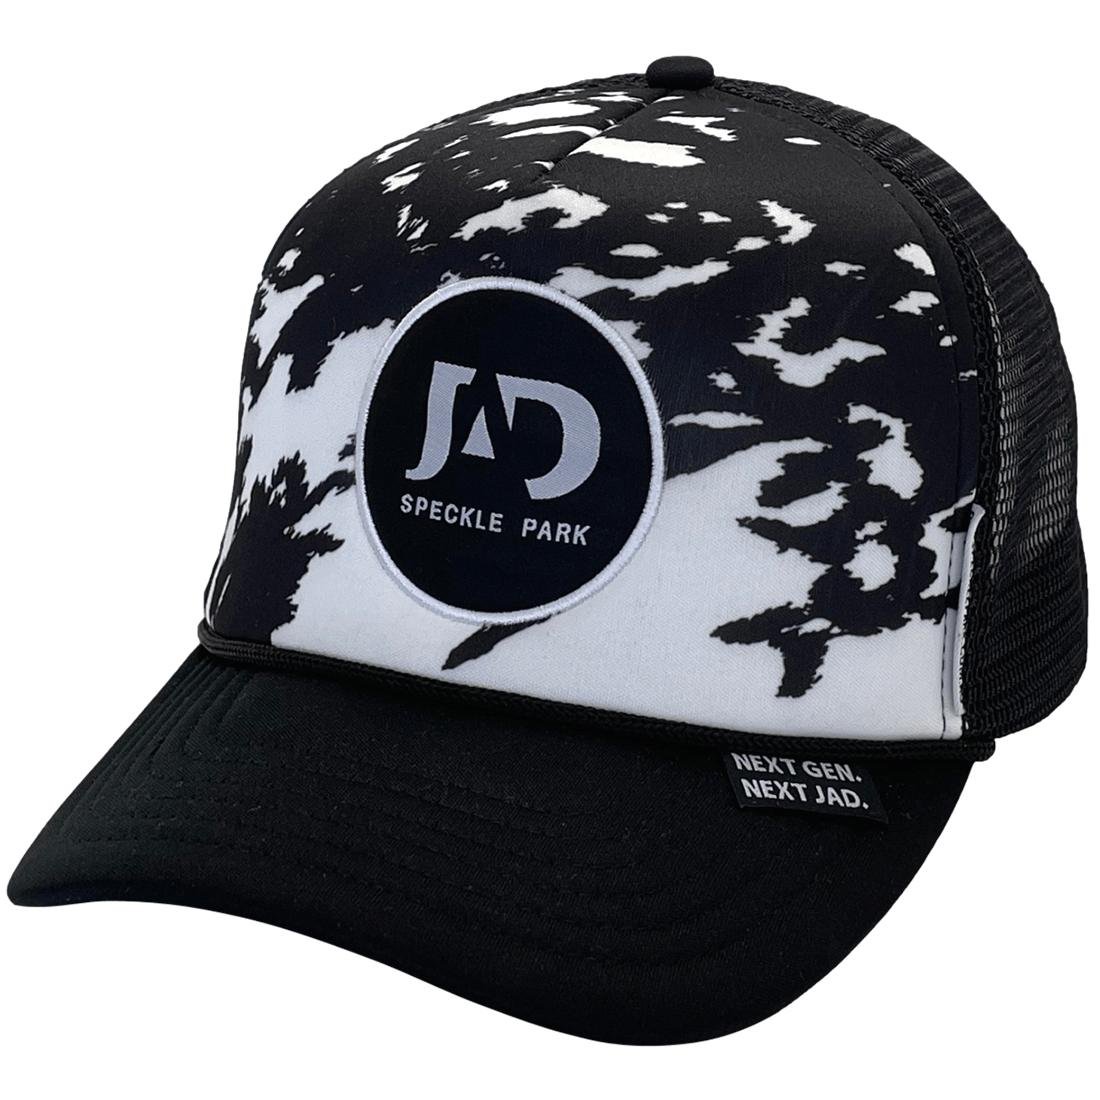 JAD Speckle Park Custom Foamie Trucker Hat